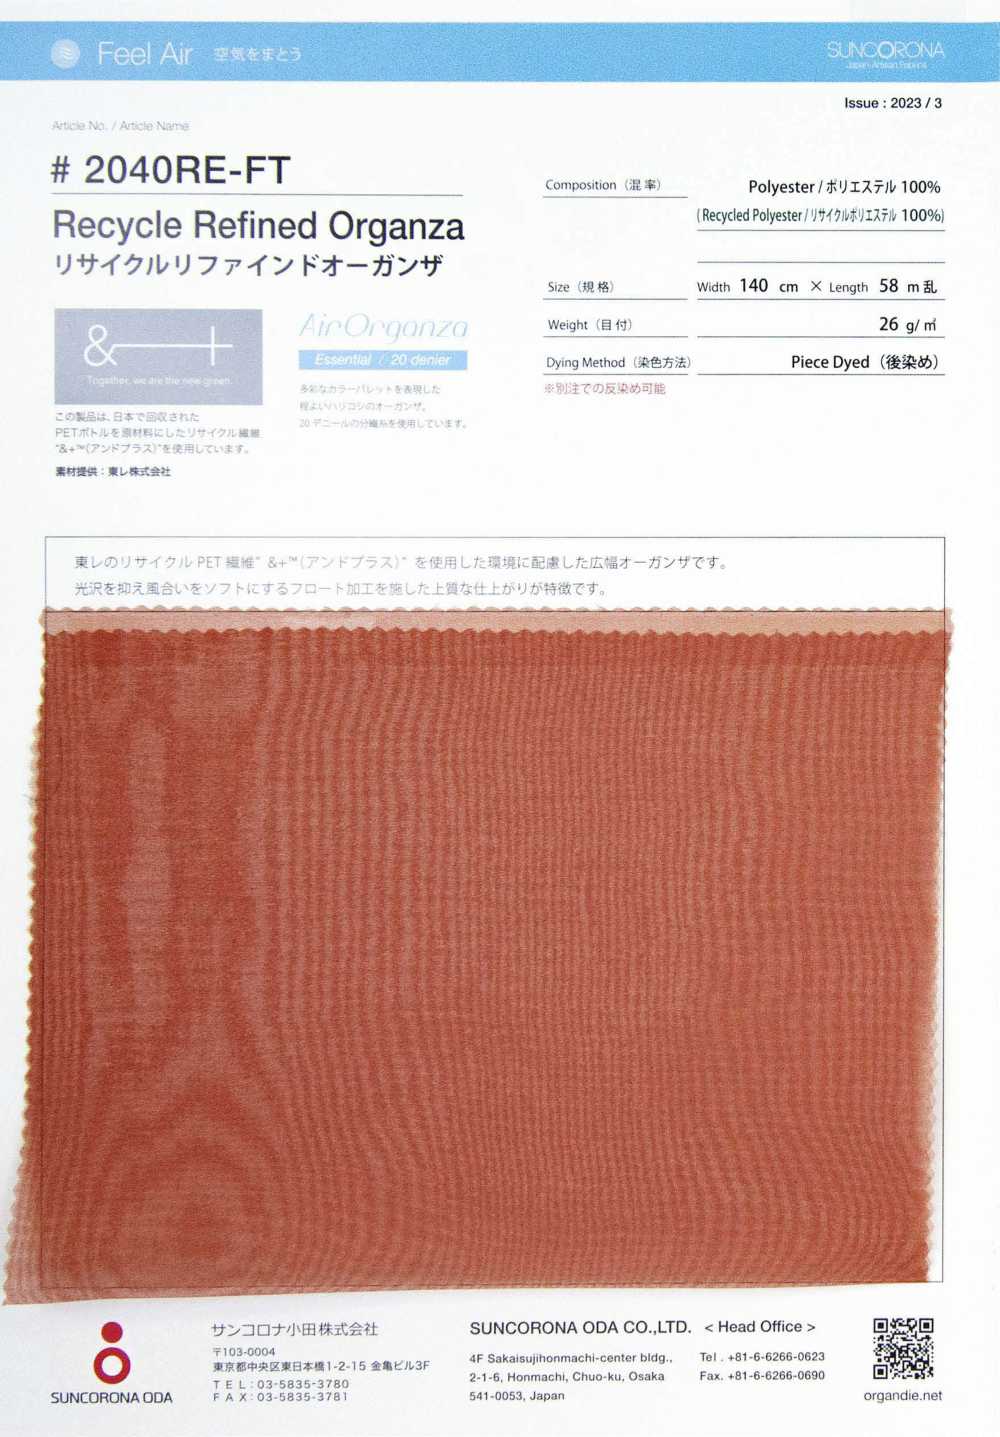 2040RE-FT Recycelter Raffinierter Organza[Textilgewebe] Suncorona Oda